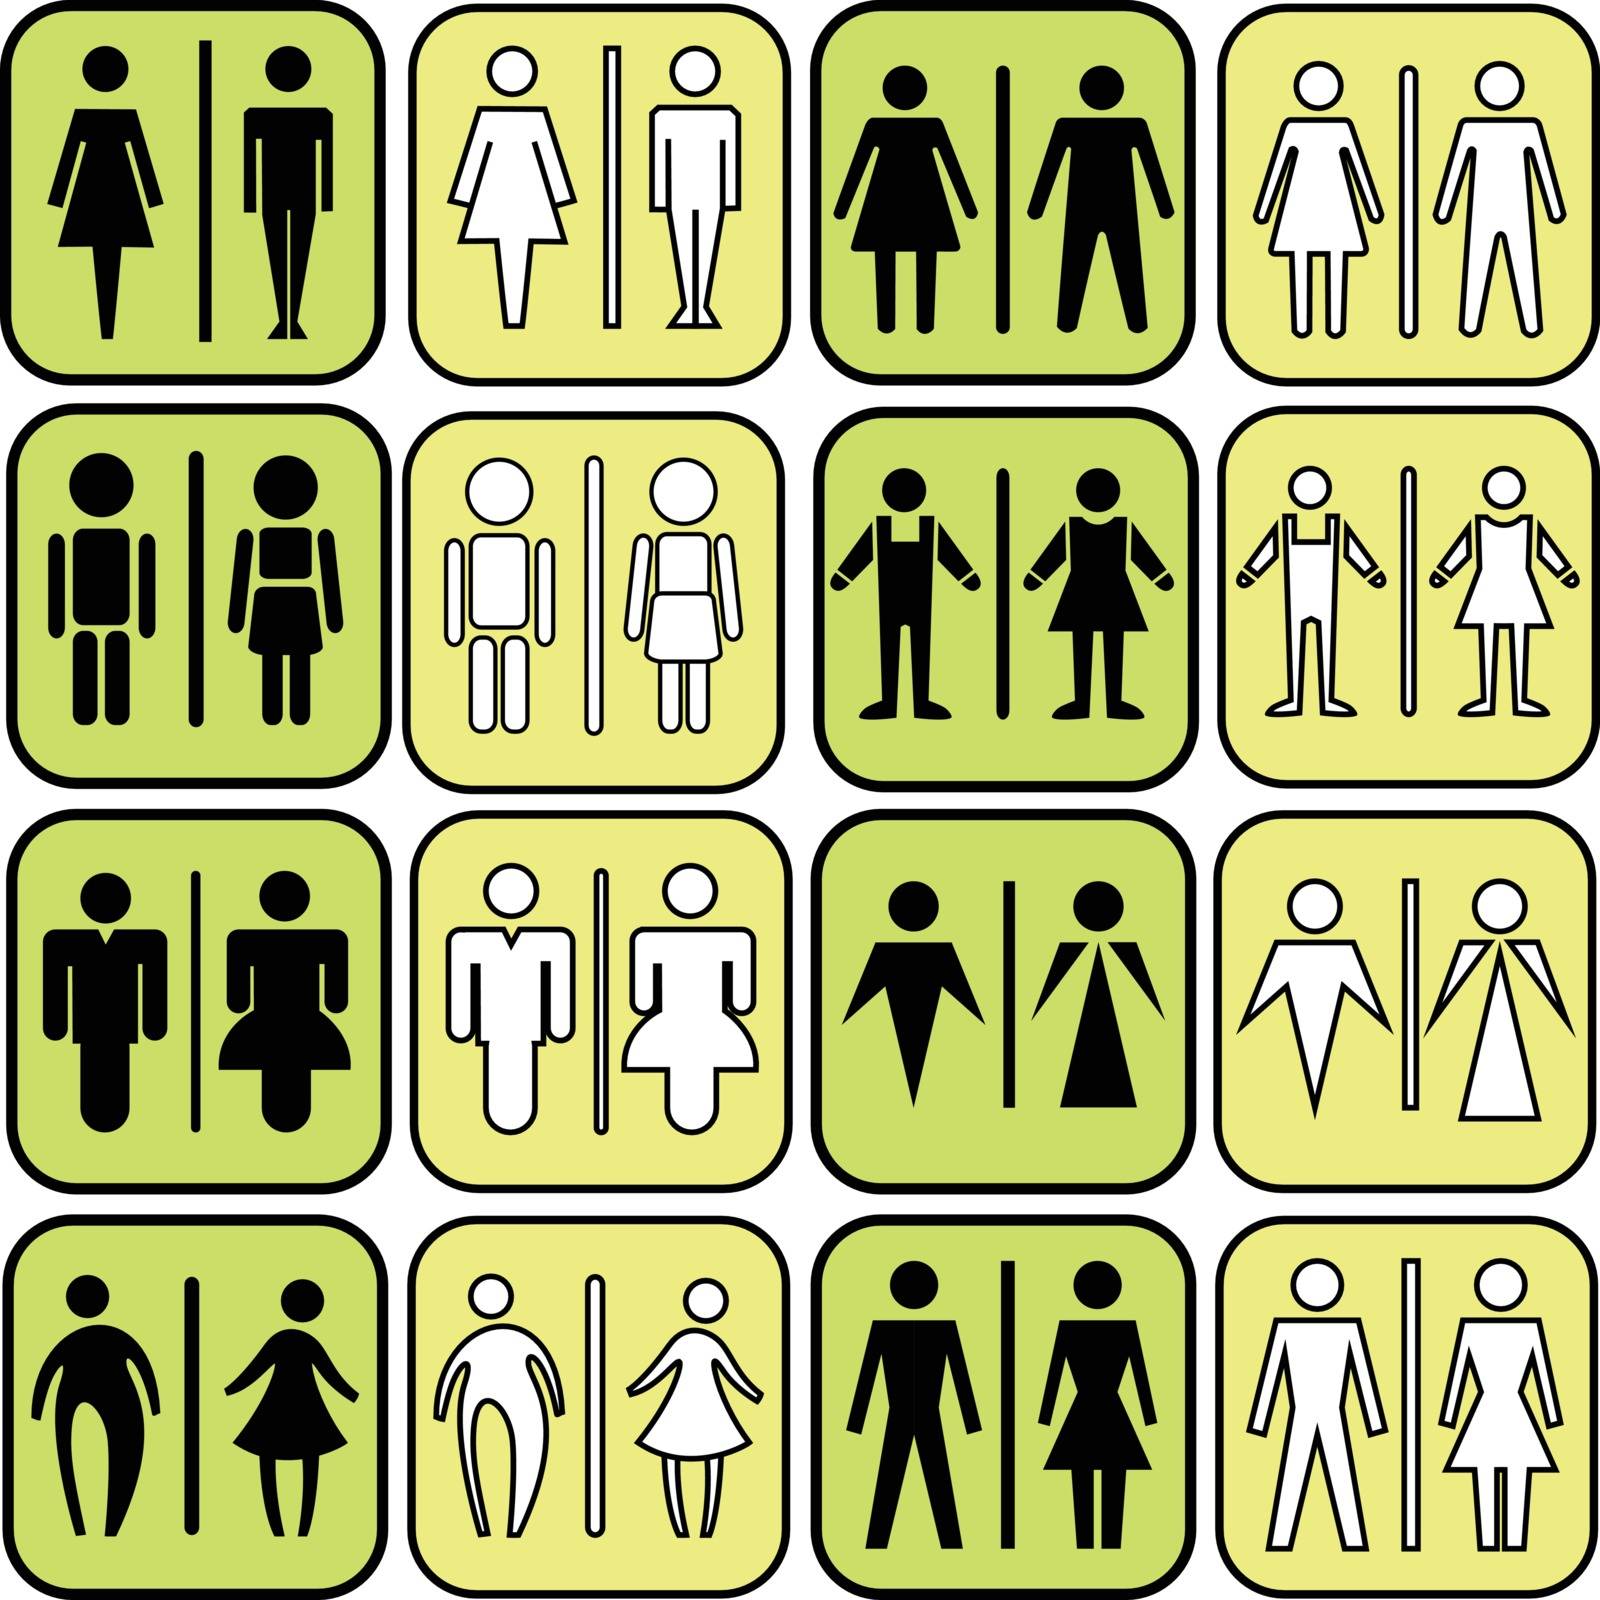 toilet icons set by choochart_sansong